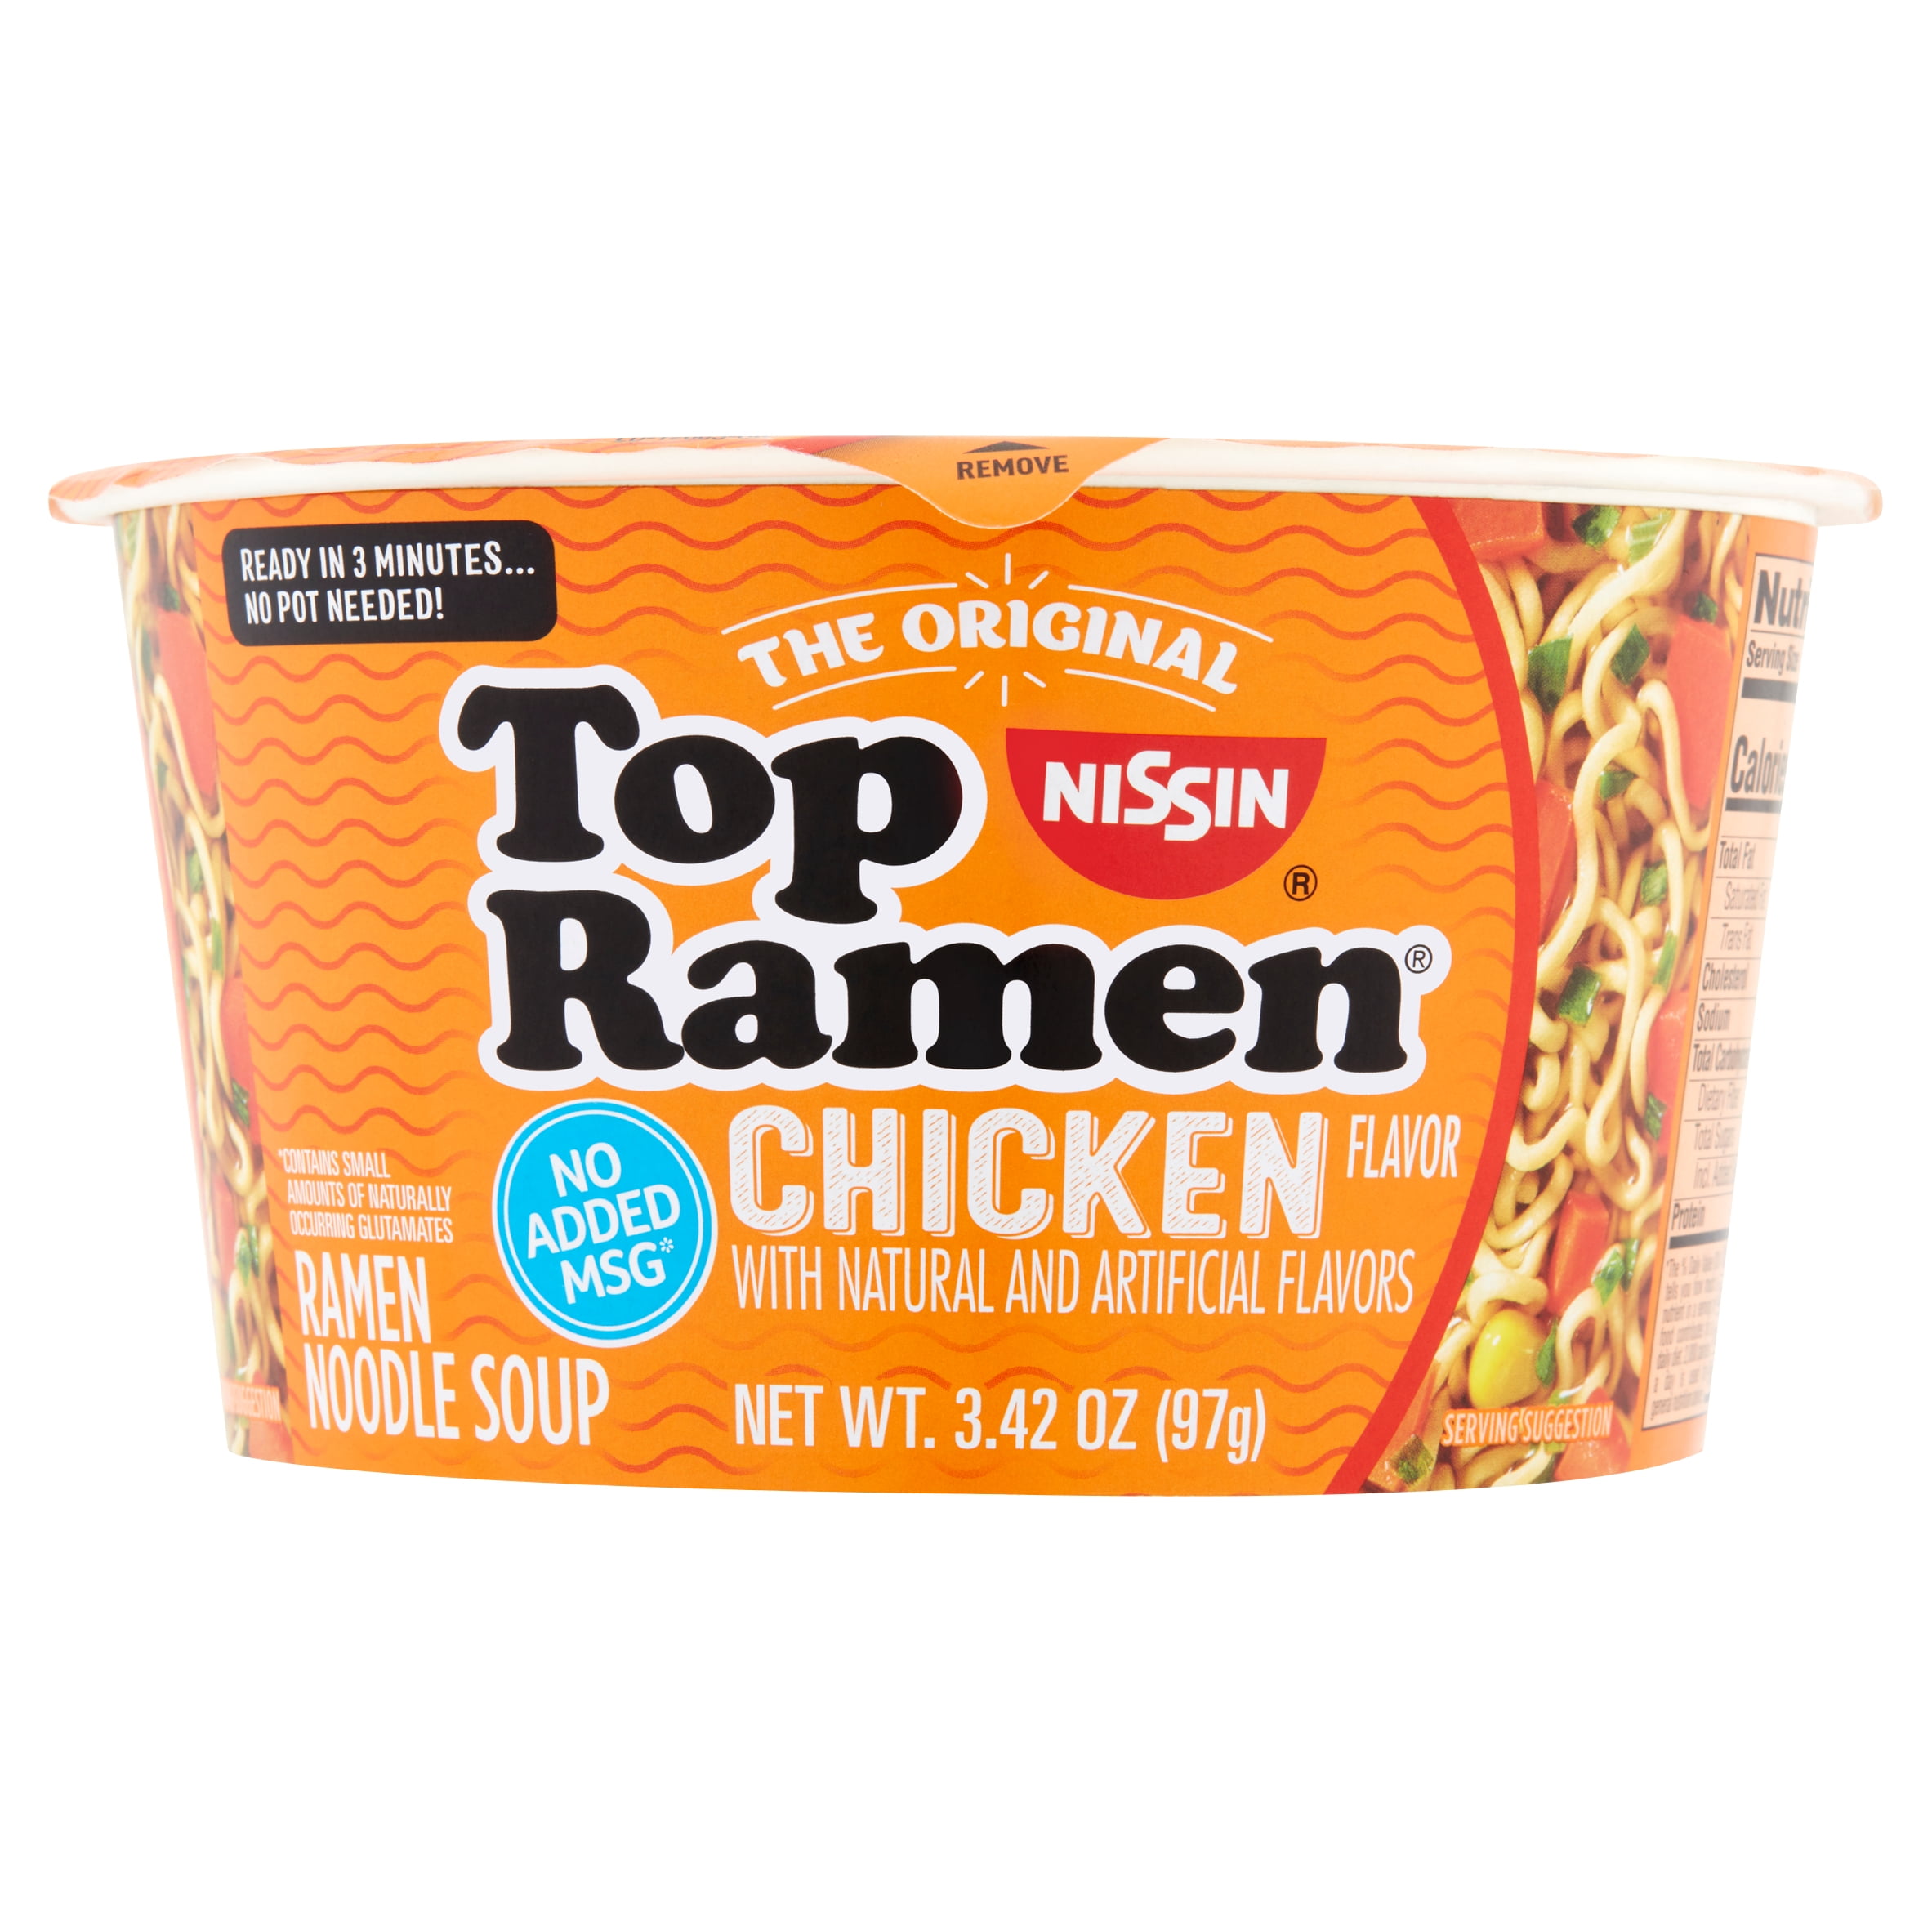 Nissin The Original Top Ramen Chicken Flavor Ramen Noodle Soup 3 42 Oz Walmart Com Walmart Com